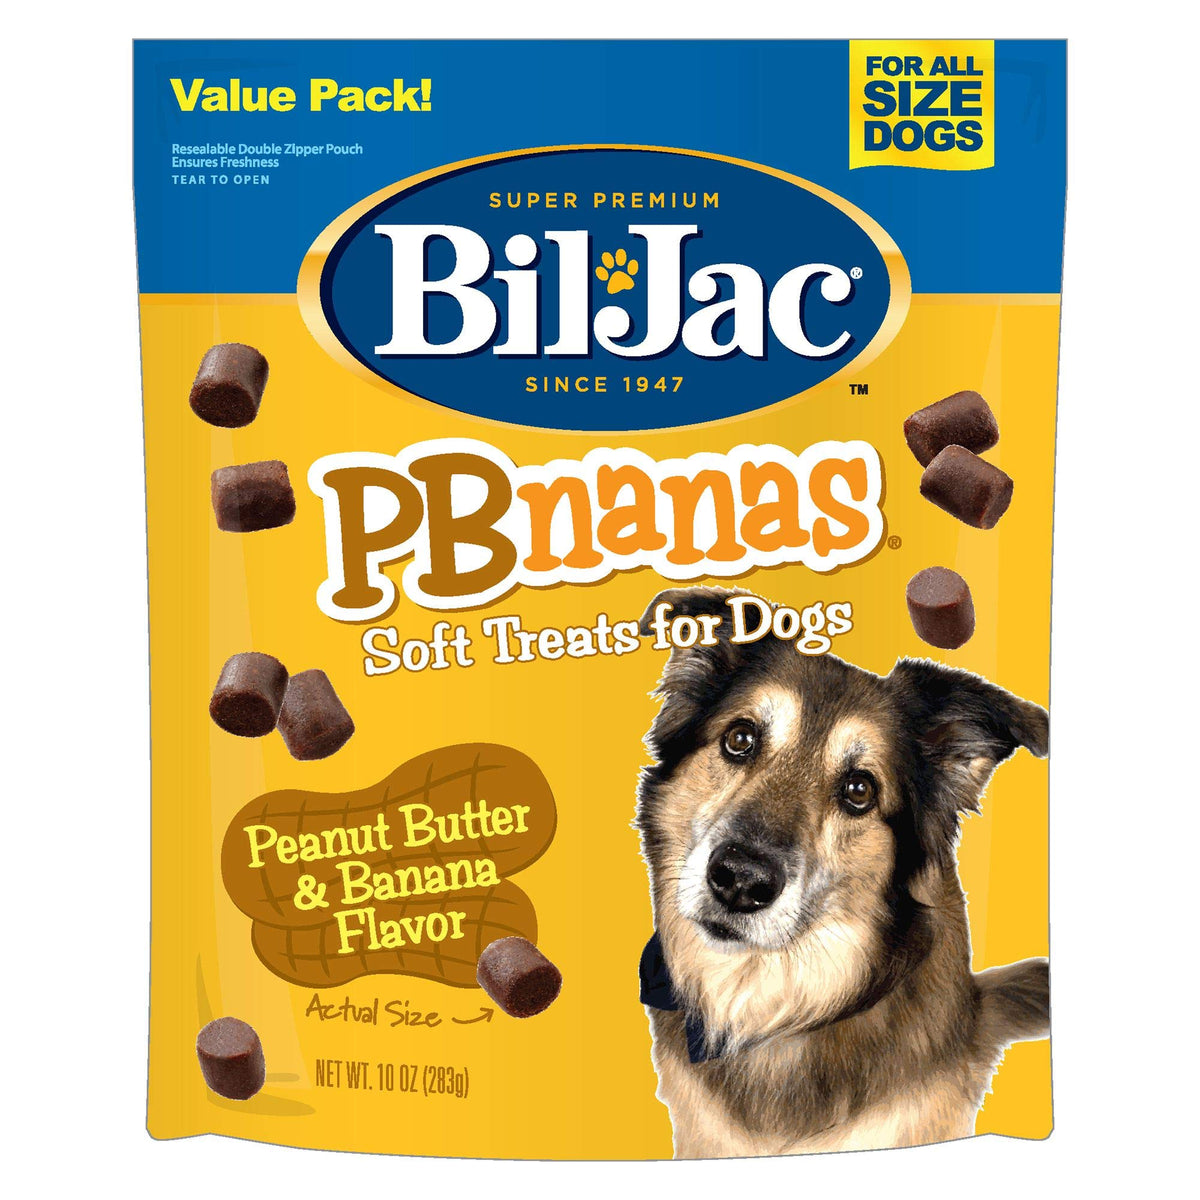 Bil-Jac PBnanas Soft Treats for Dogs - Puppy Training Treat Rewards, 10oz Resealable Double Zipper Pouch, Peanut Butter & Banana Flavor Chicken Liver Dog Treats (2-Pack)